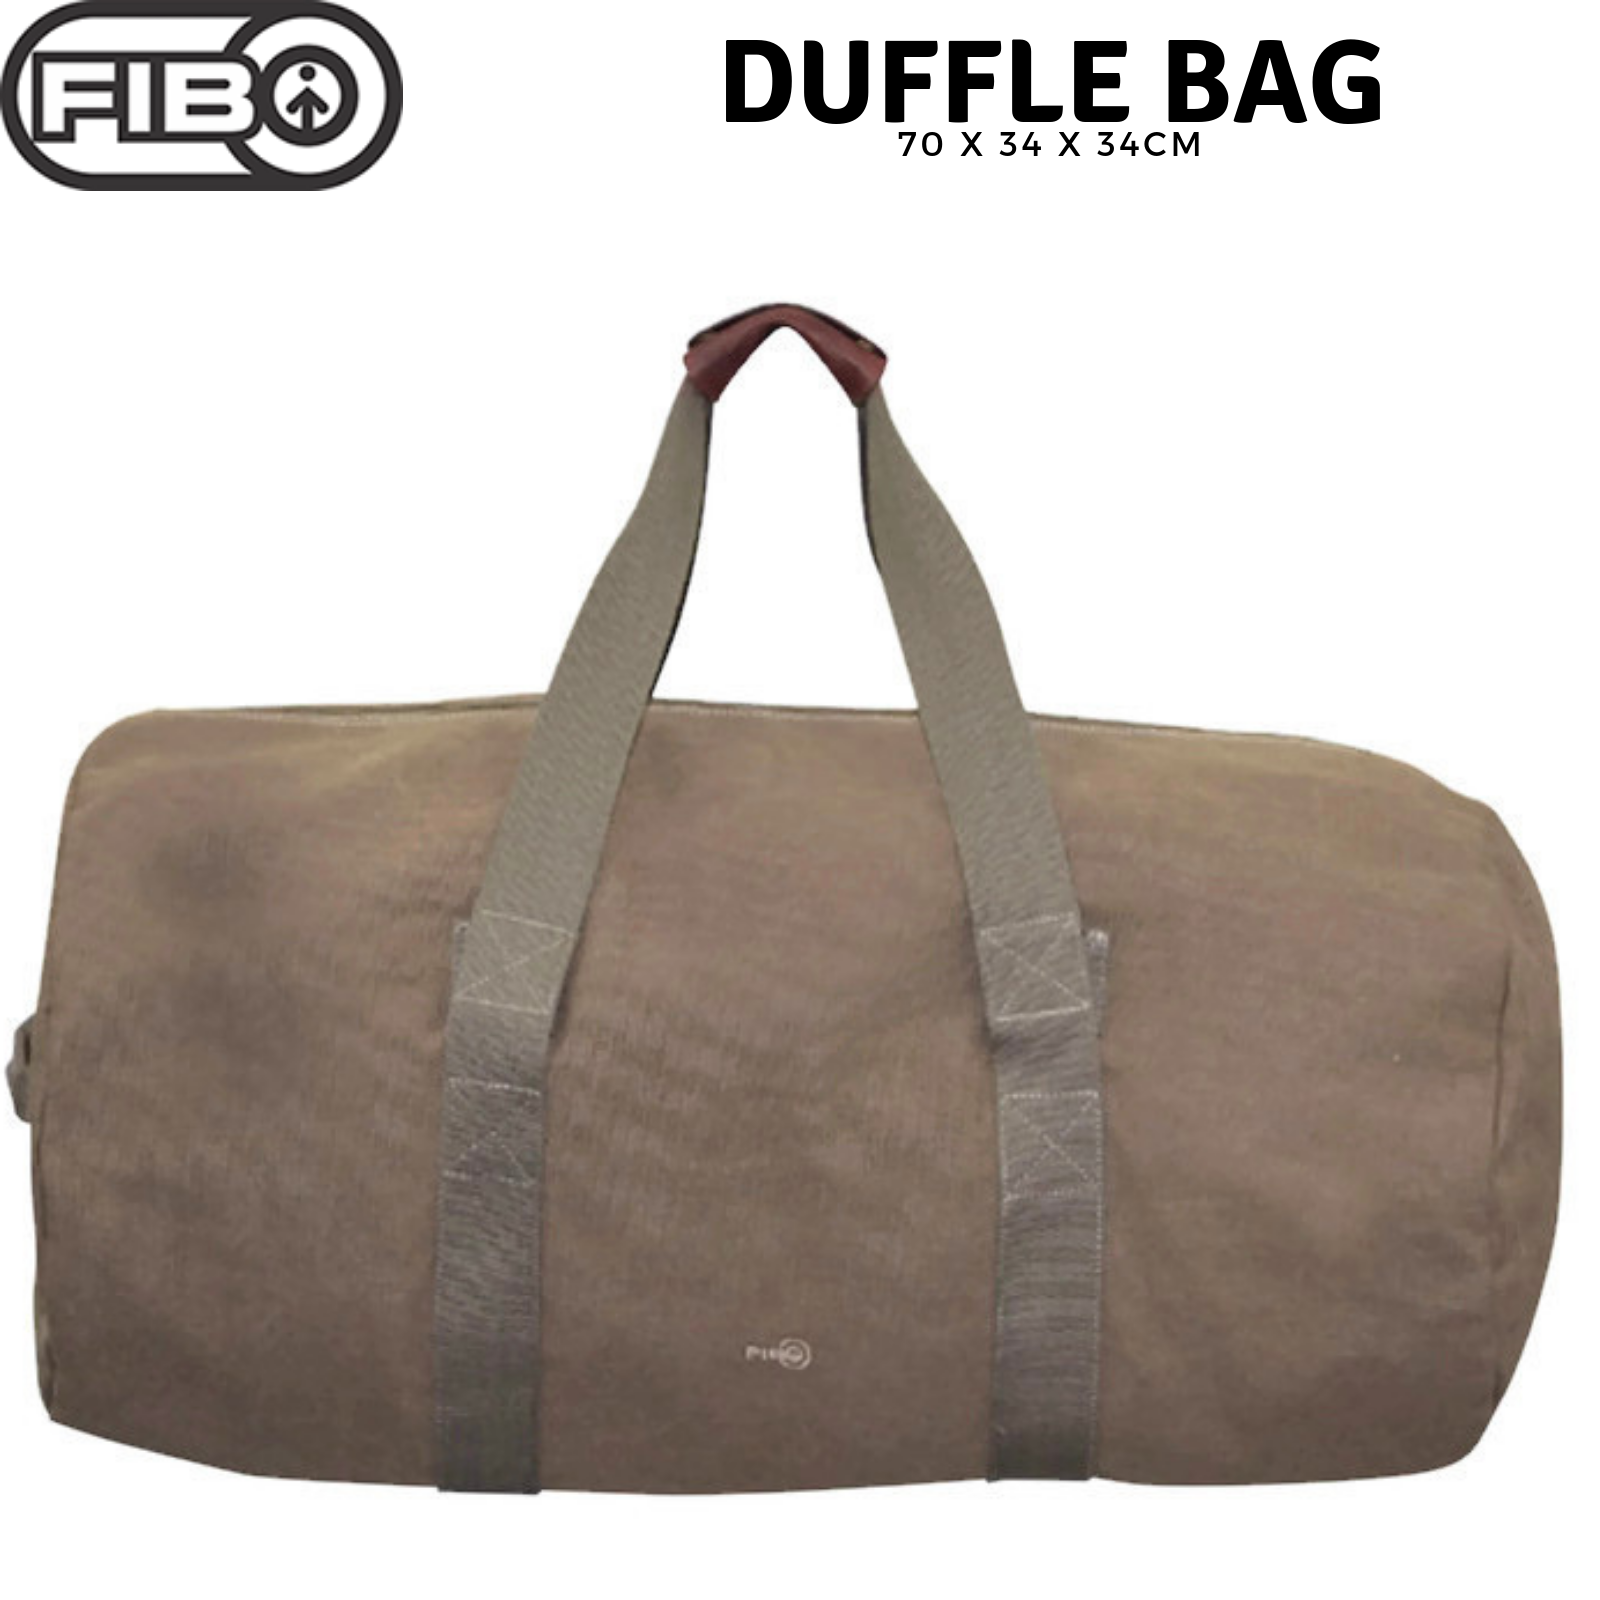 70cm Canvas Duffle Bag Travel Heavy Duty Large Sports Gym Work - Khaki